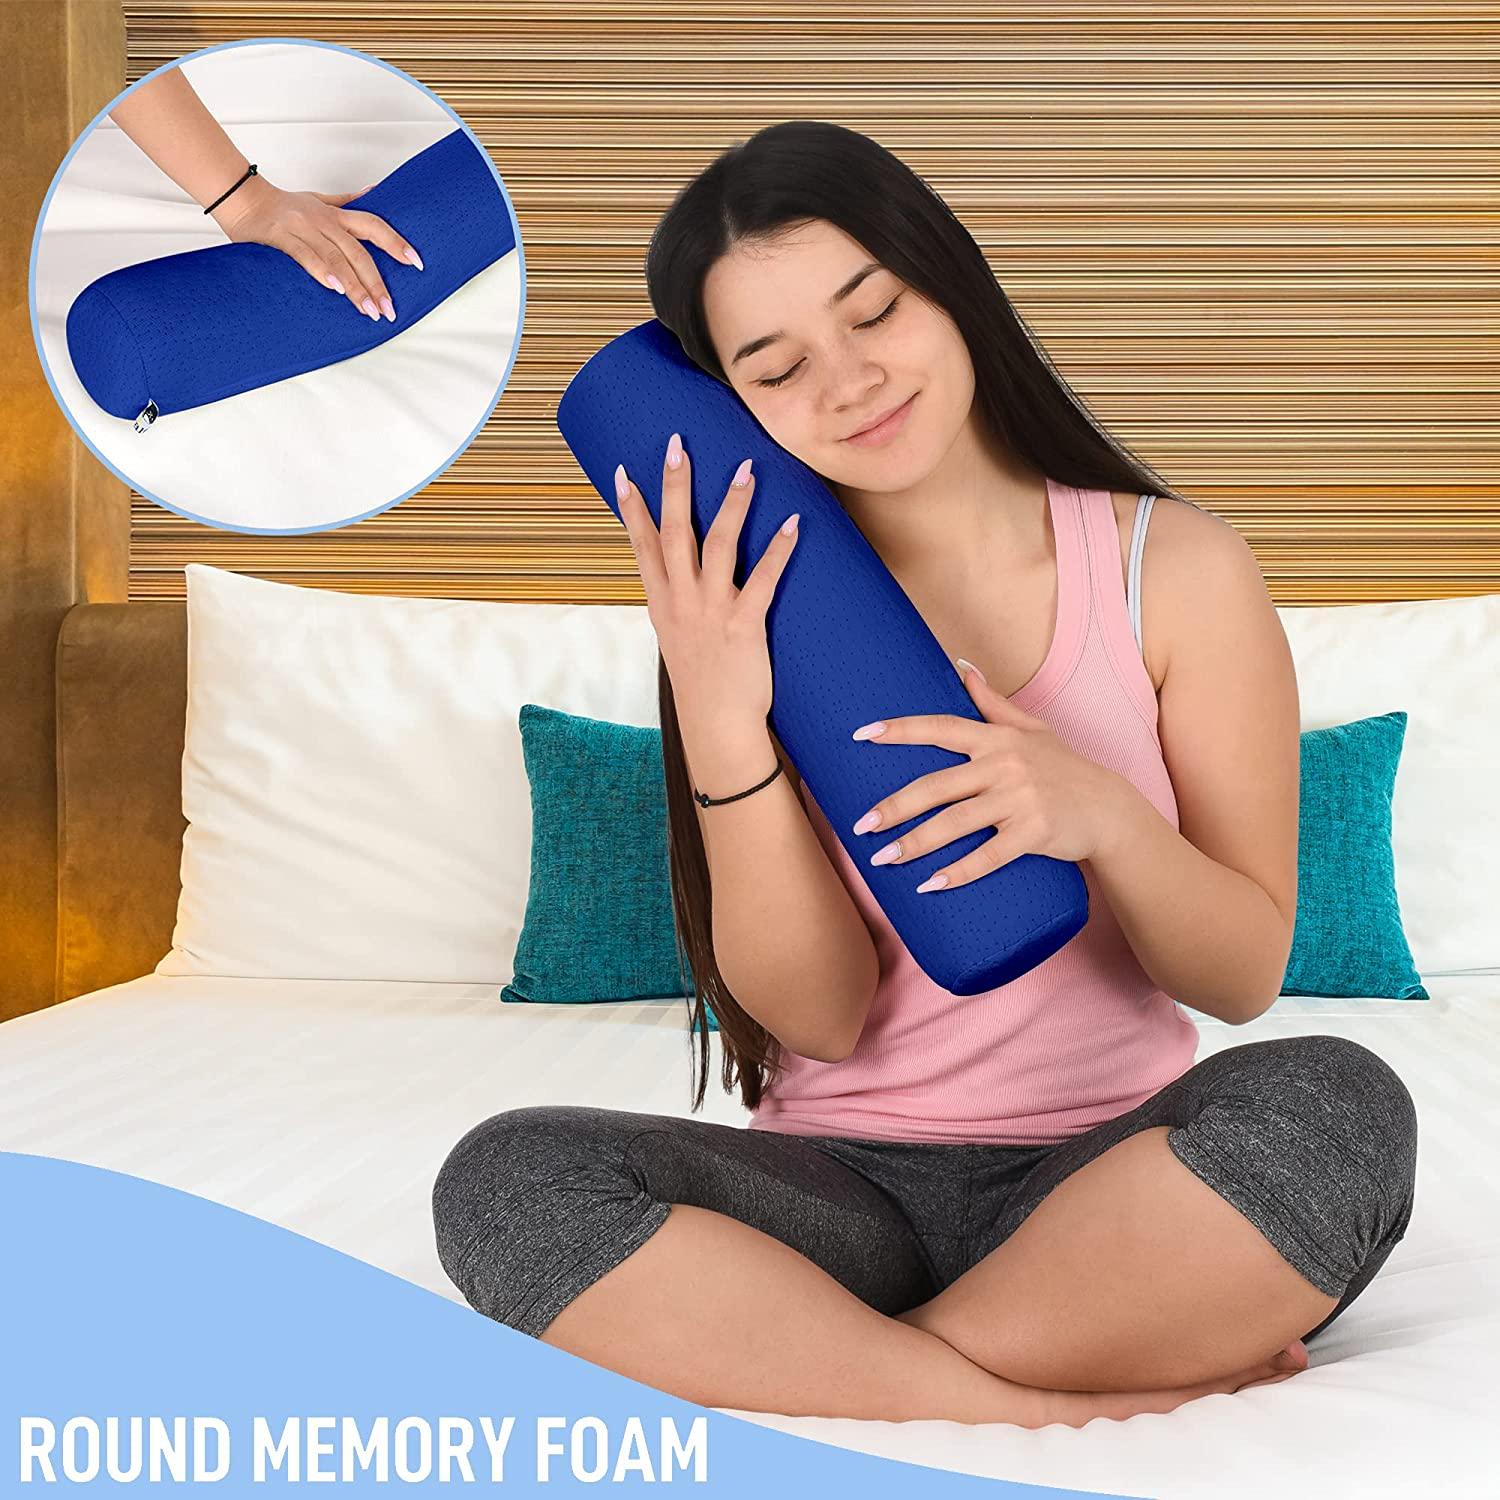 Premium Memory Foam Knee Pillow With Bamboo Cover 